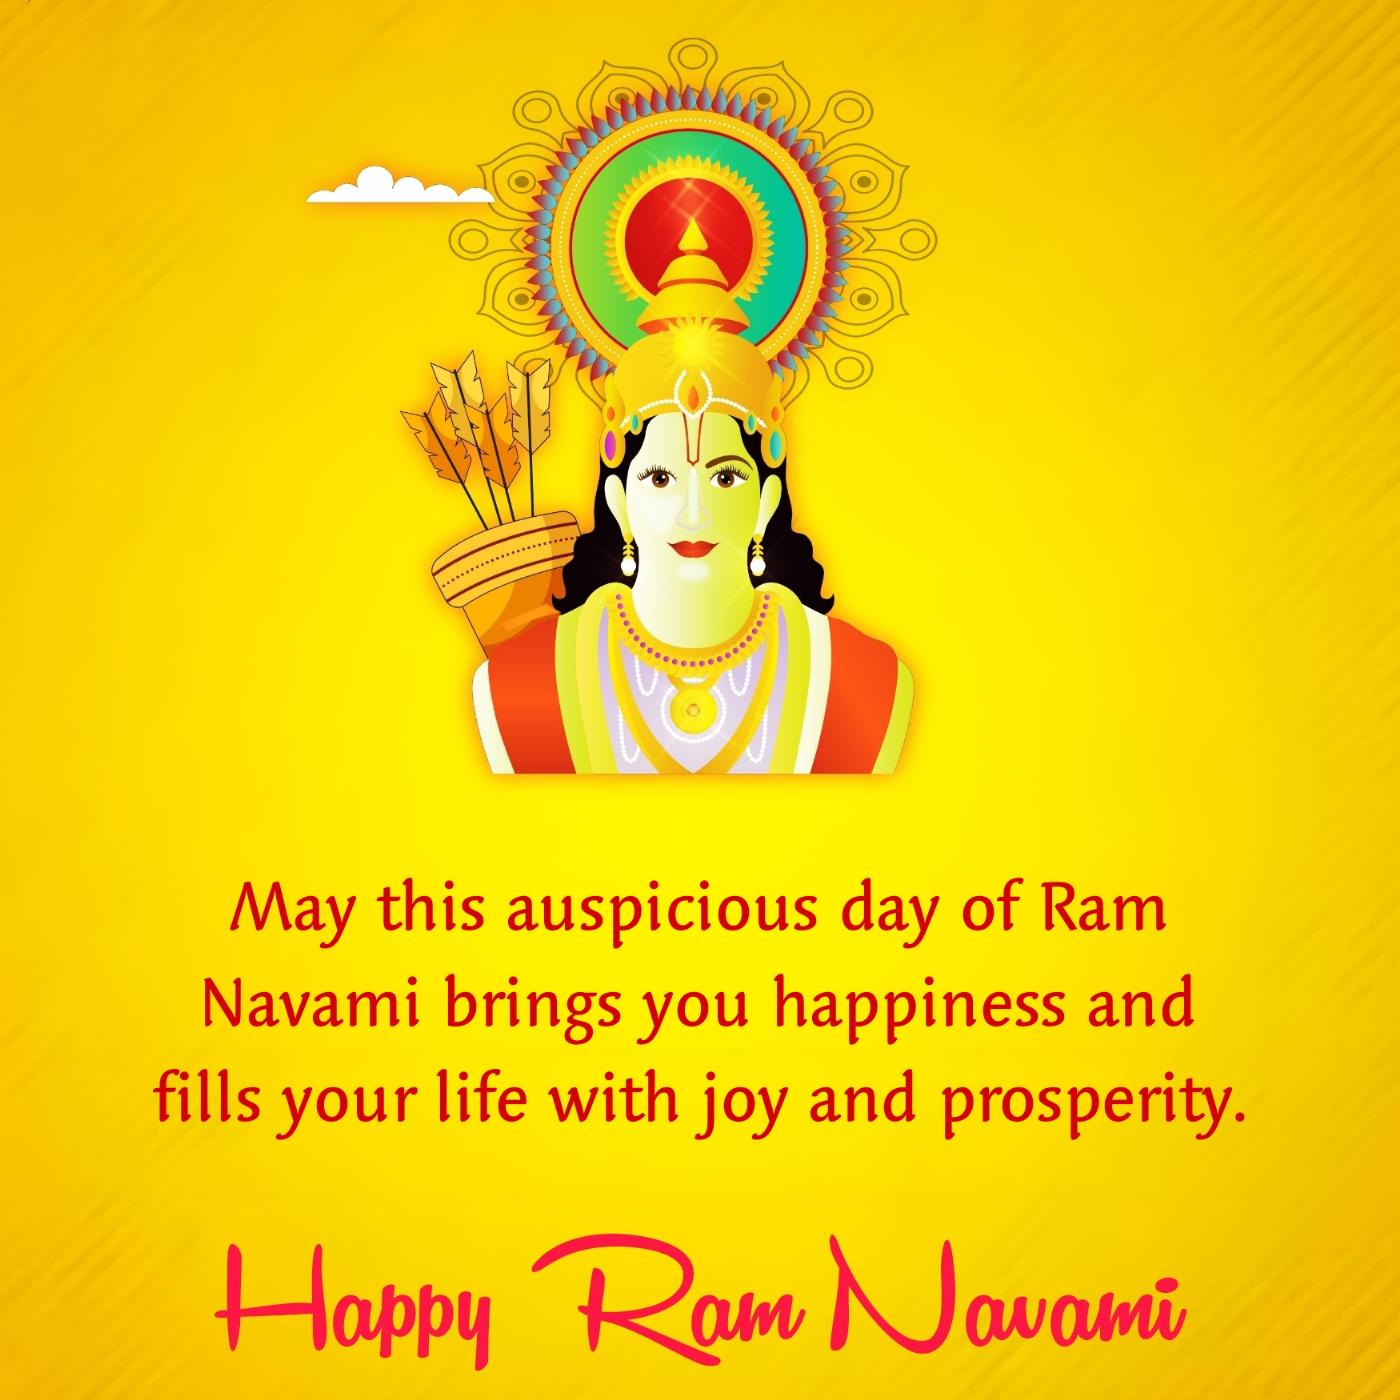 May this auspicious day of Ram Navami brings you happiness